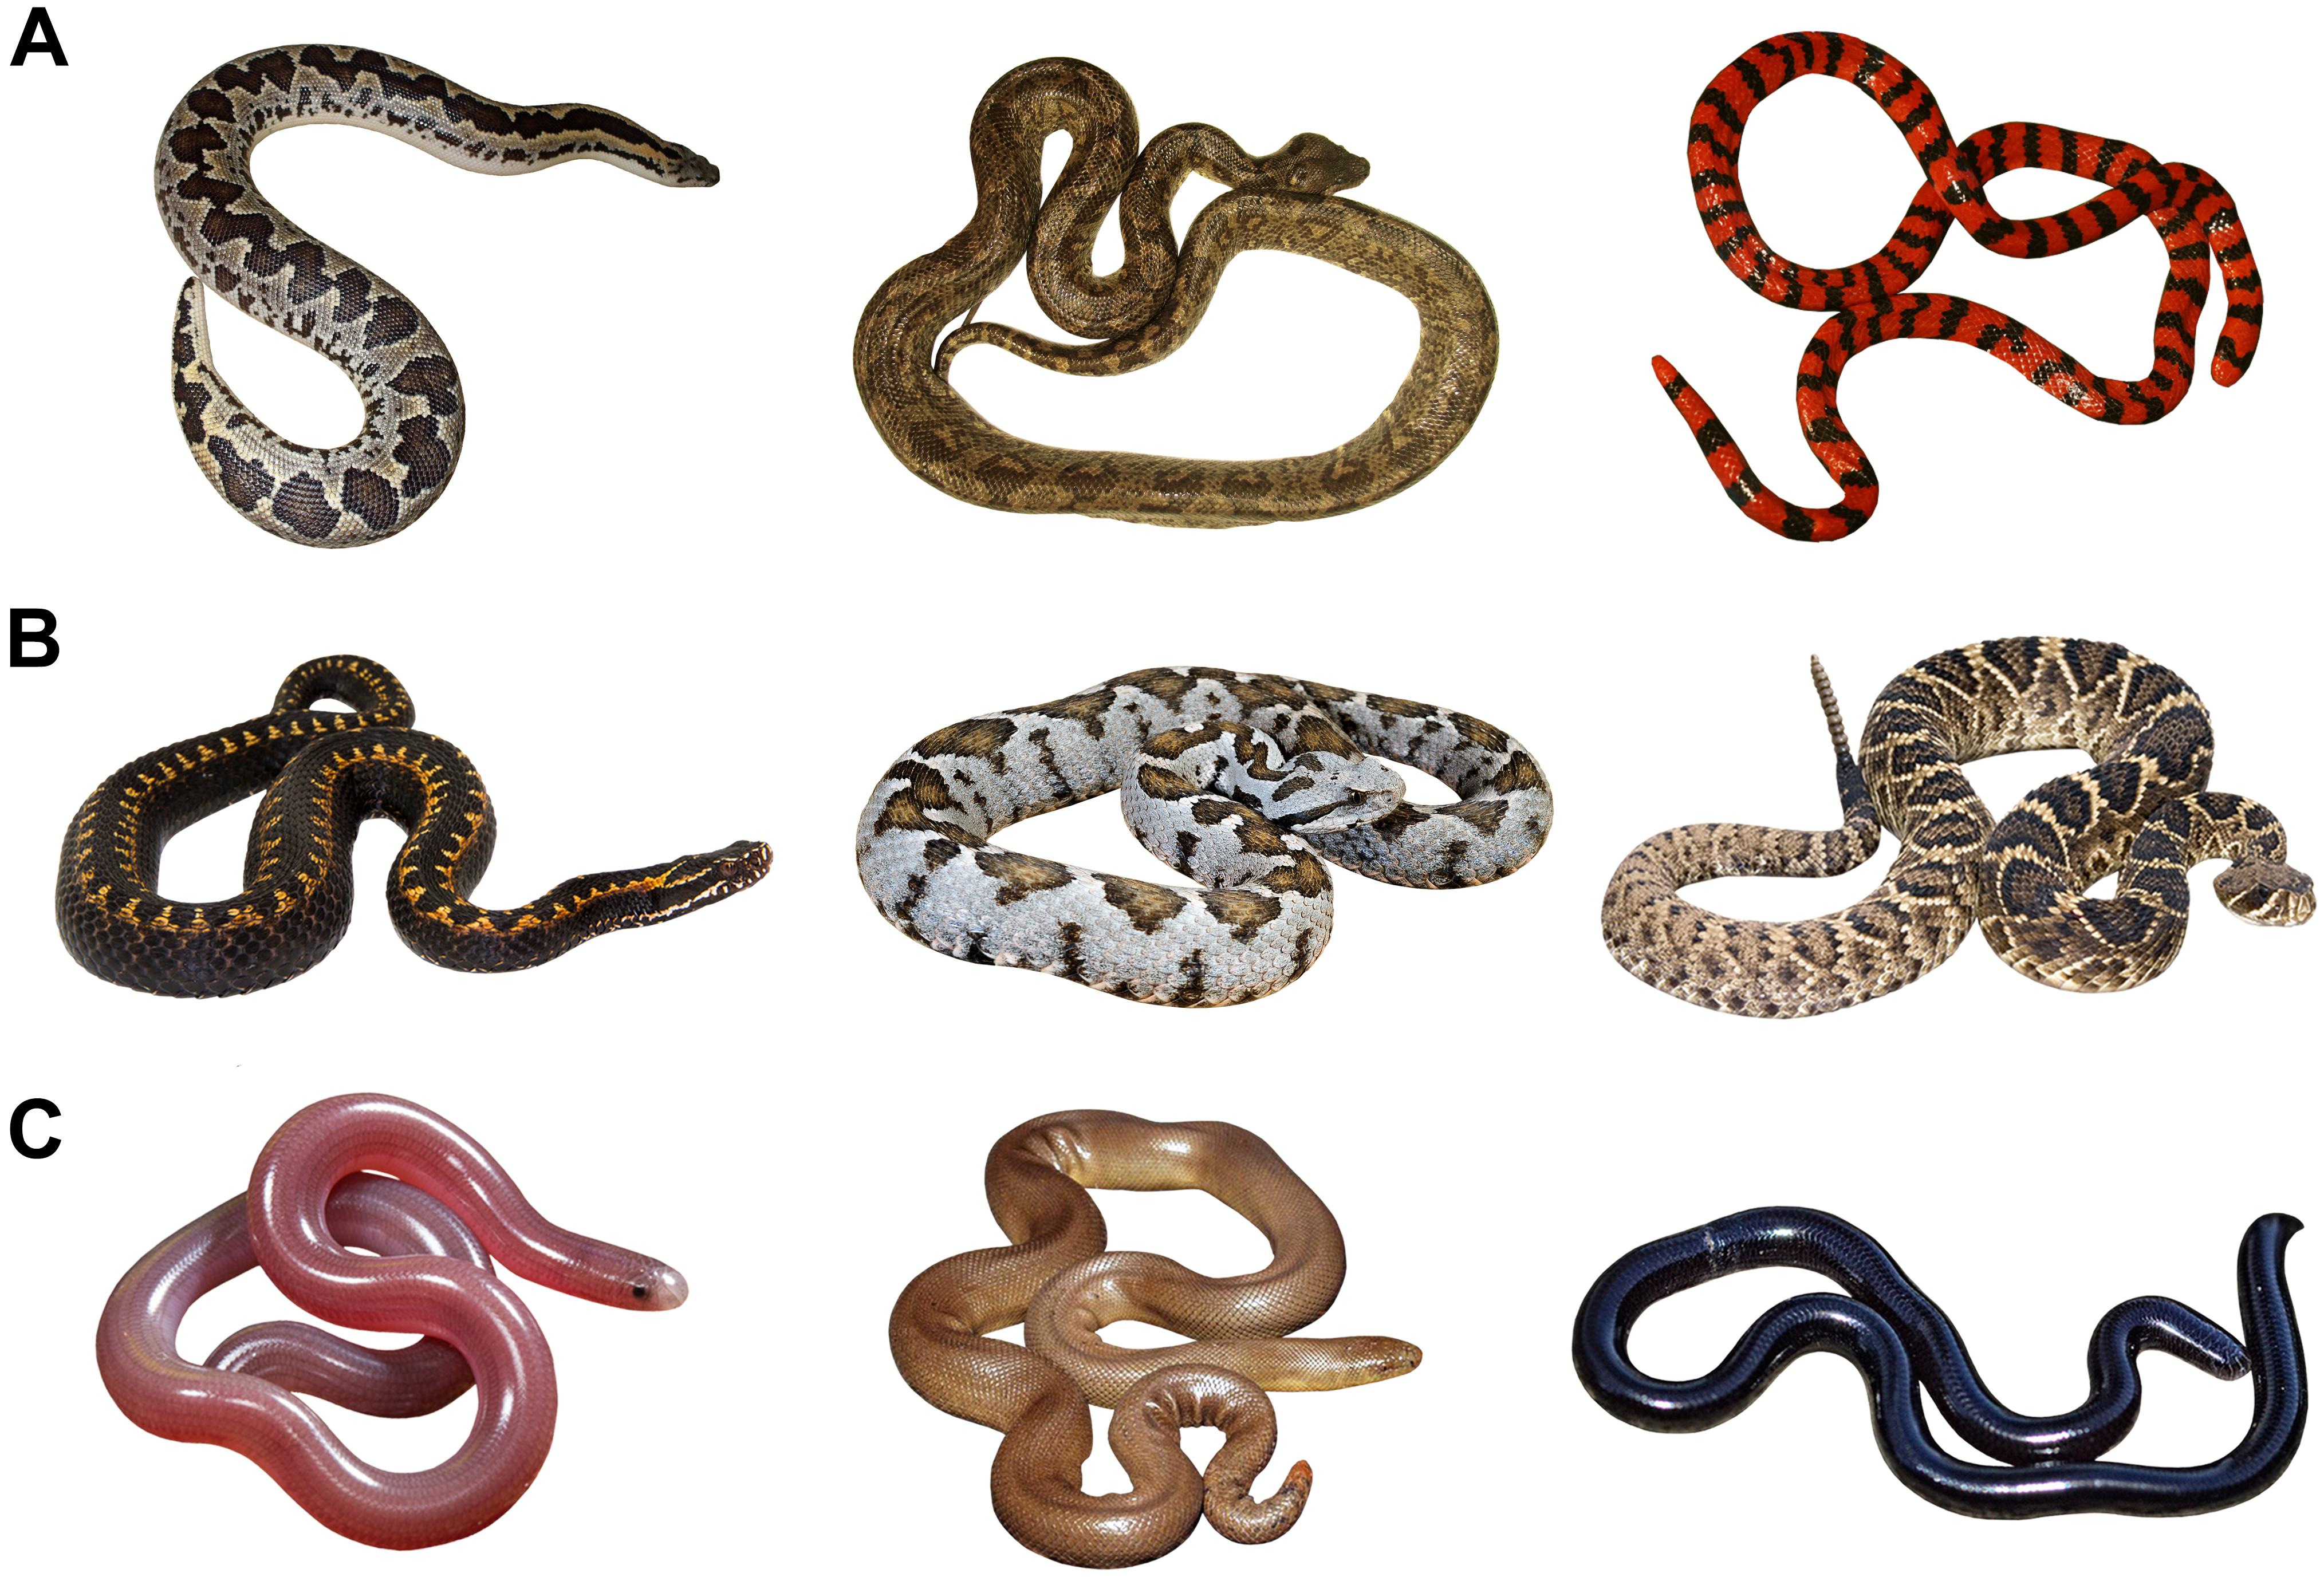 species of snakes